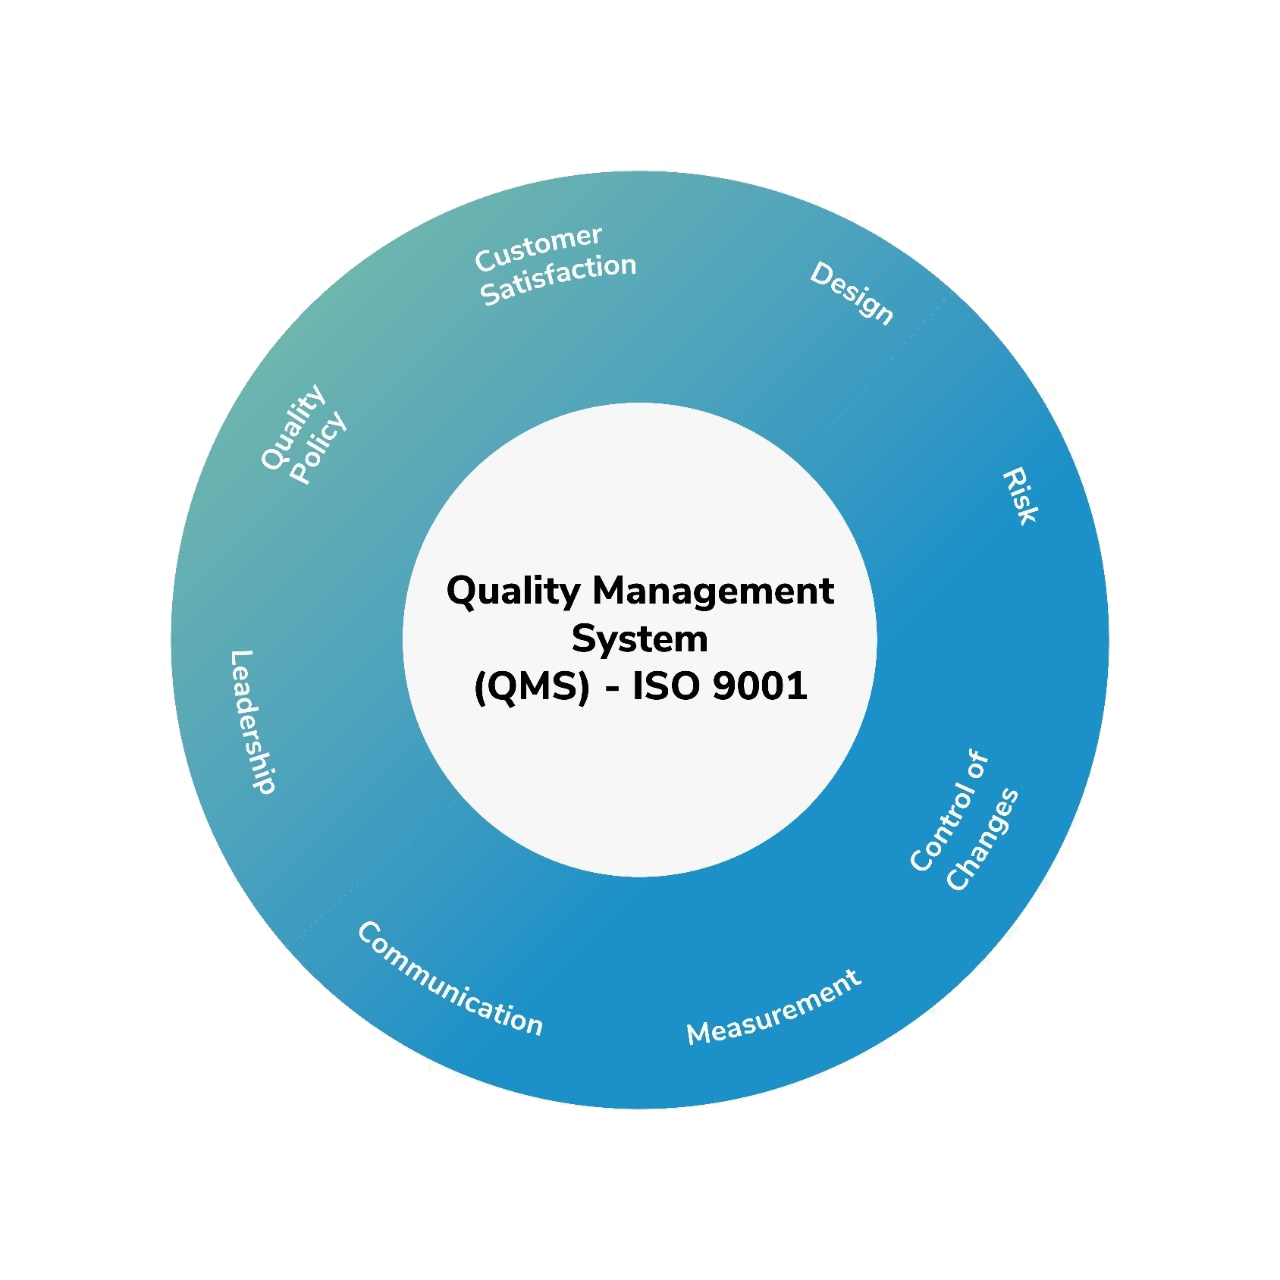 https://ovetix.com/wp-content/uploads/2020/12/quality_management_system.png